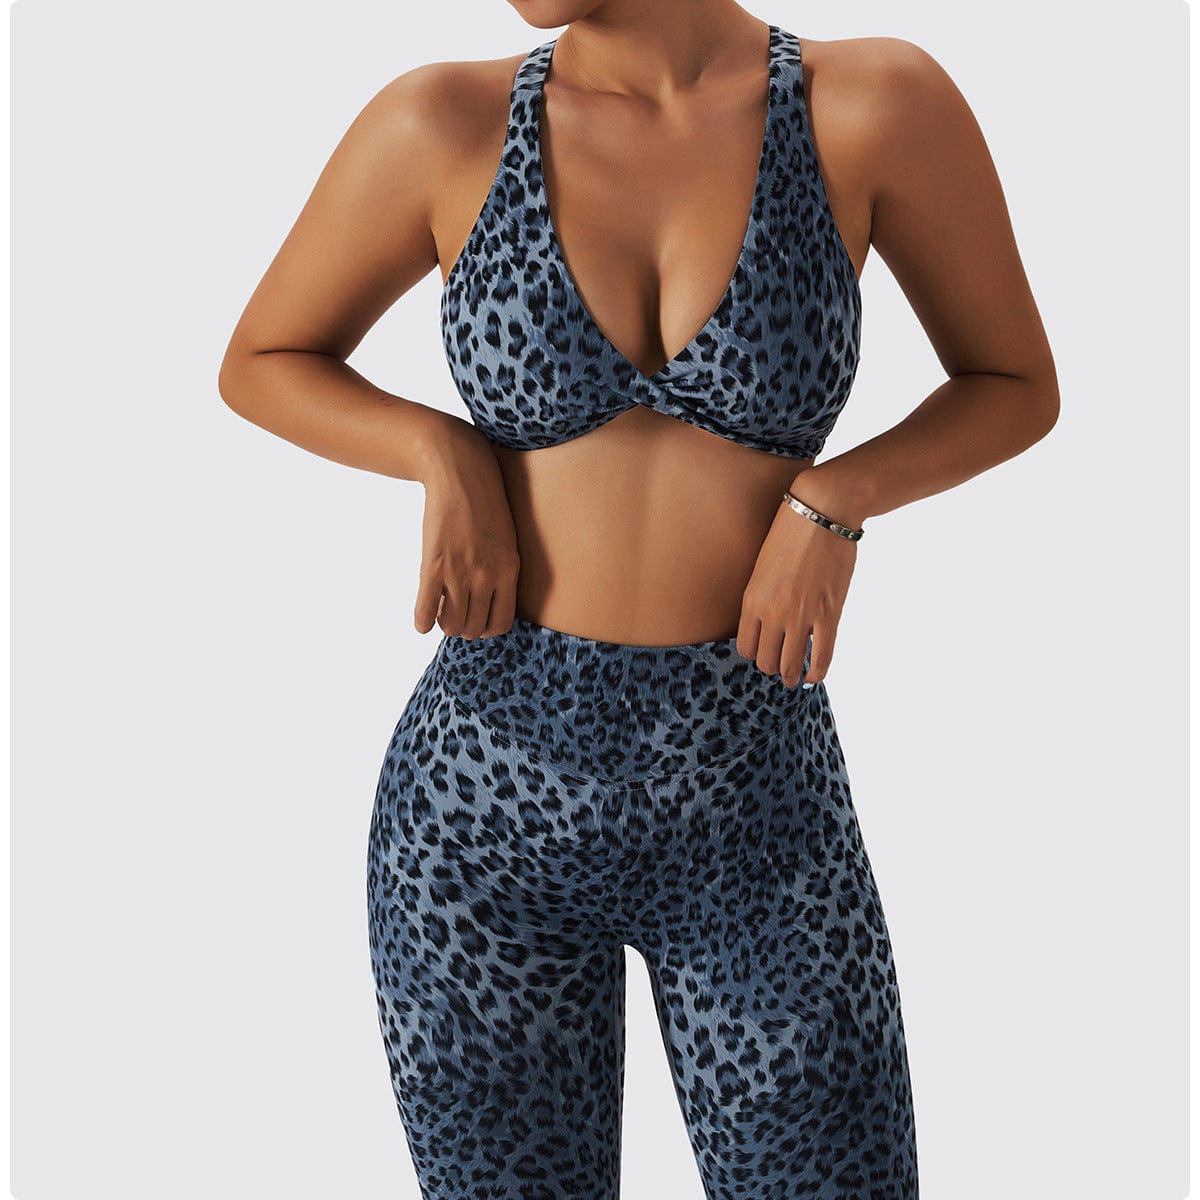 Women's Aqua Leopard Animal Print Sports Bra V-neck T-back Yoga